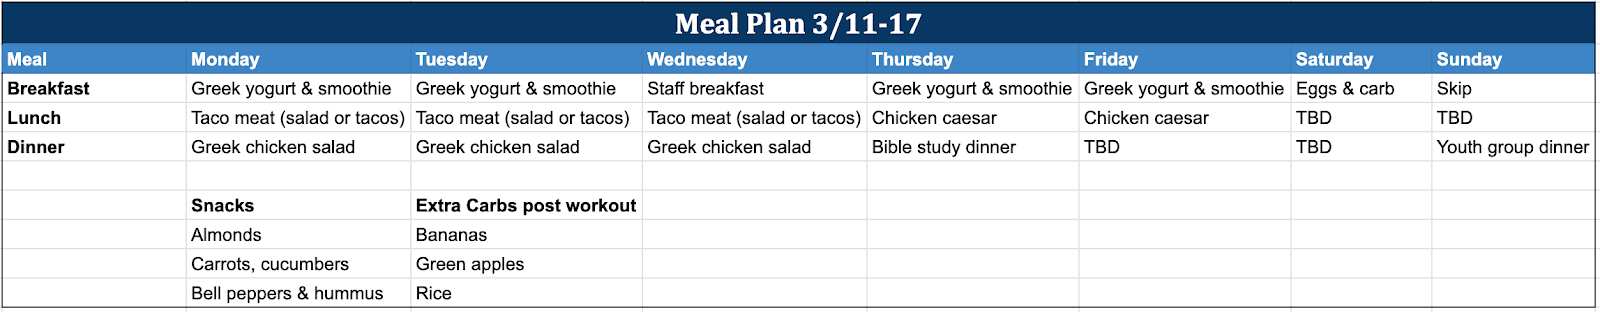 meal prep business plan pdf